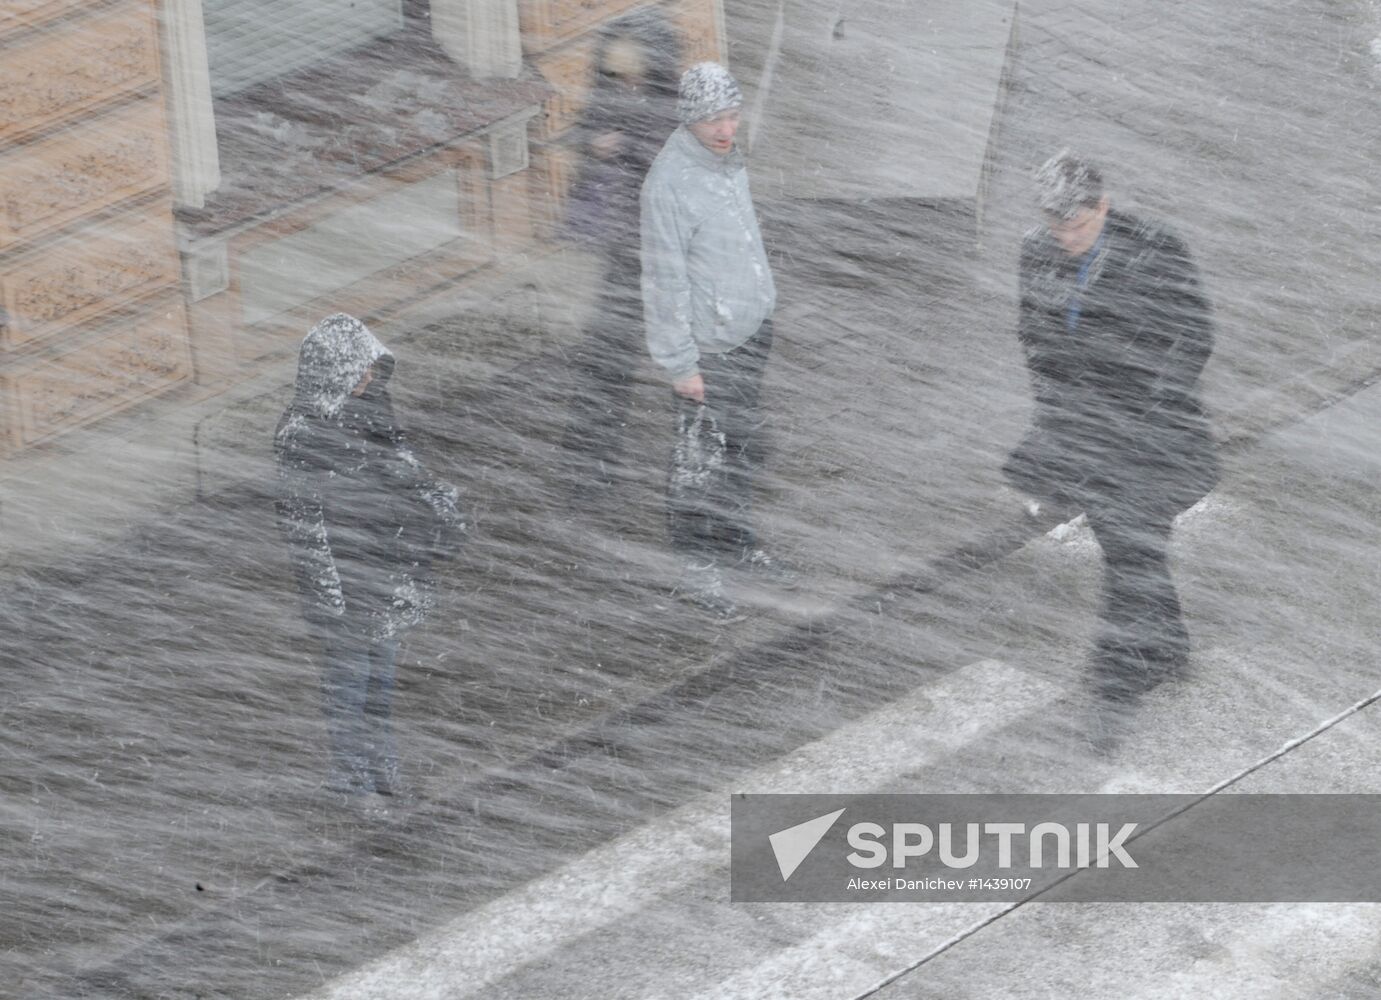 April snowstorm in St. Petersburg